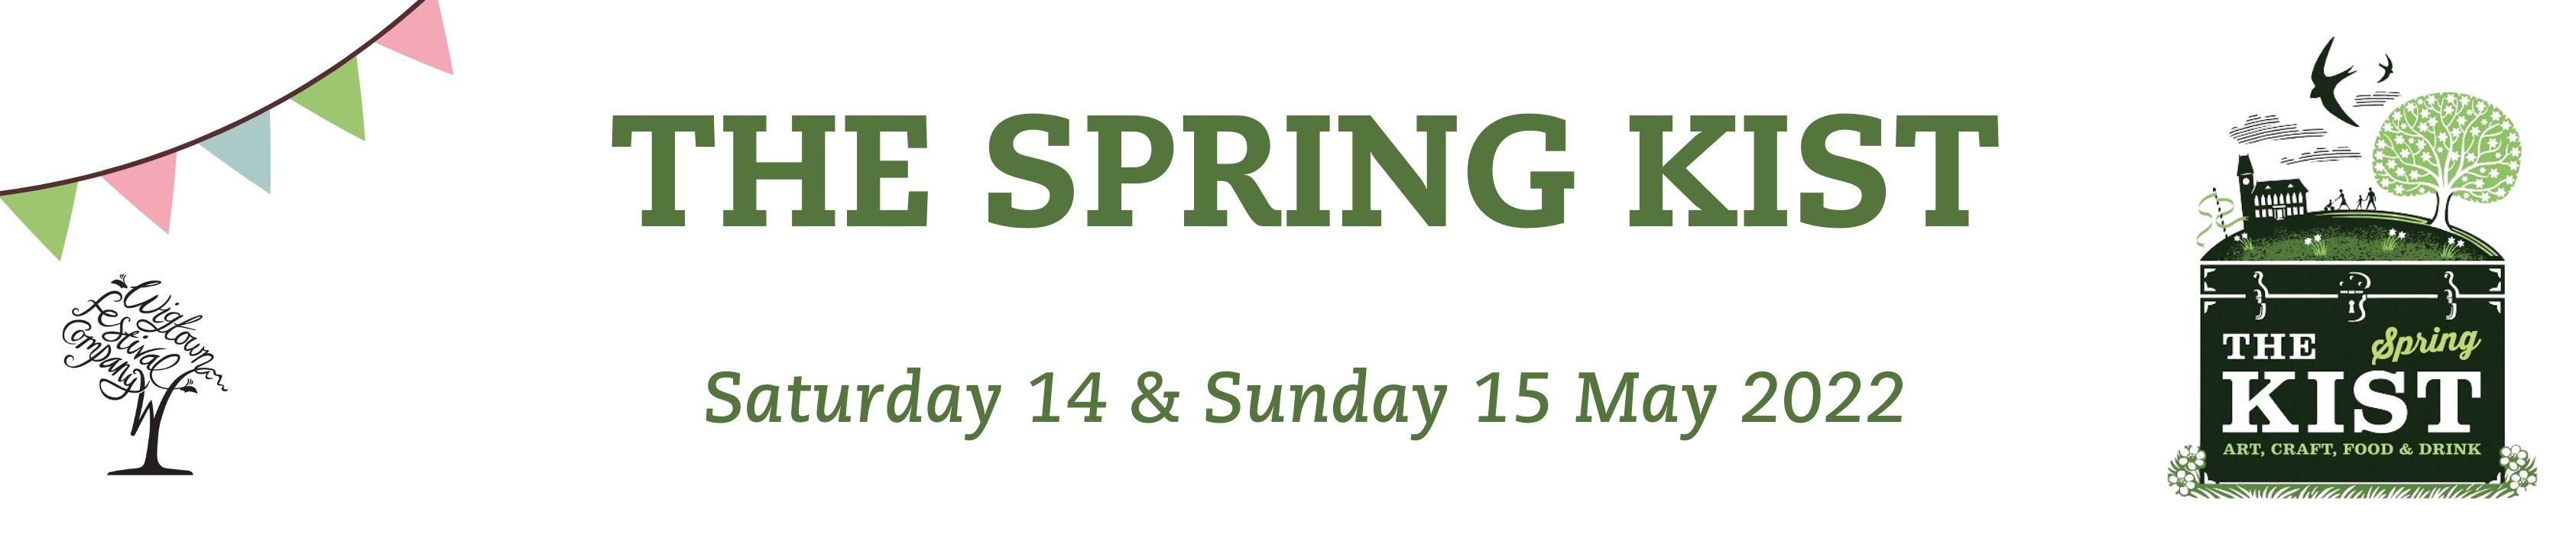 Spring Kist Website Blog banner 1